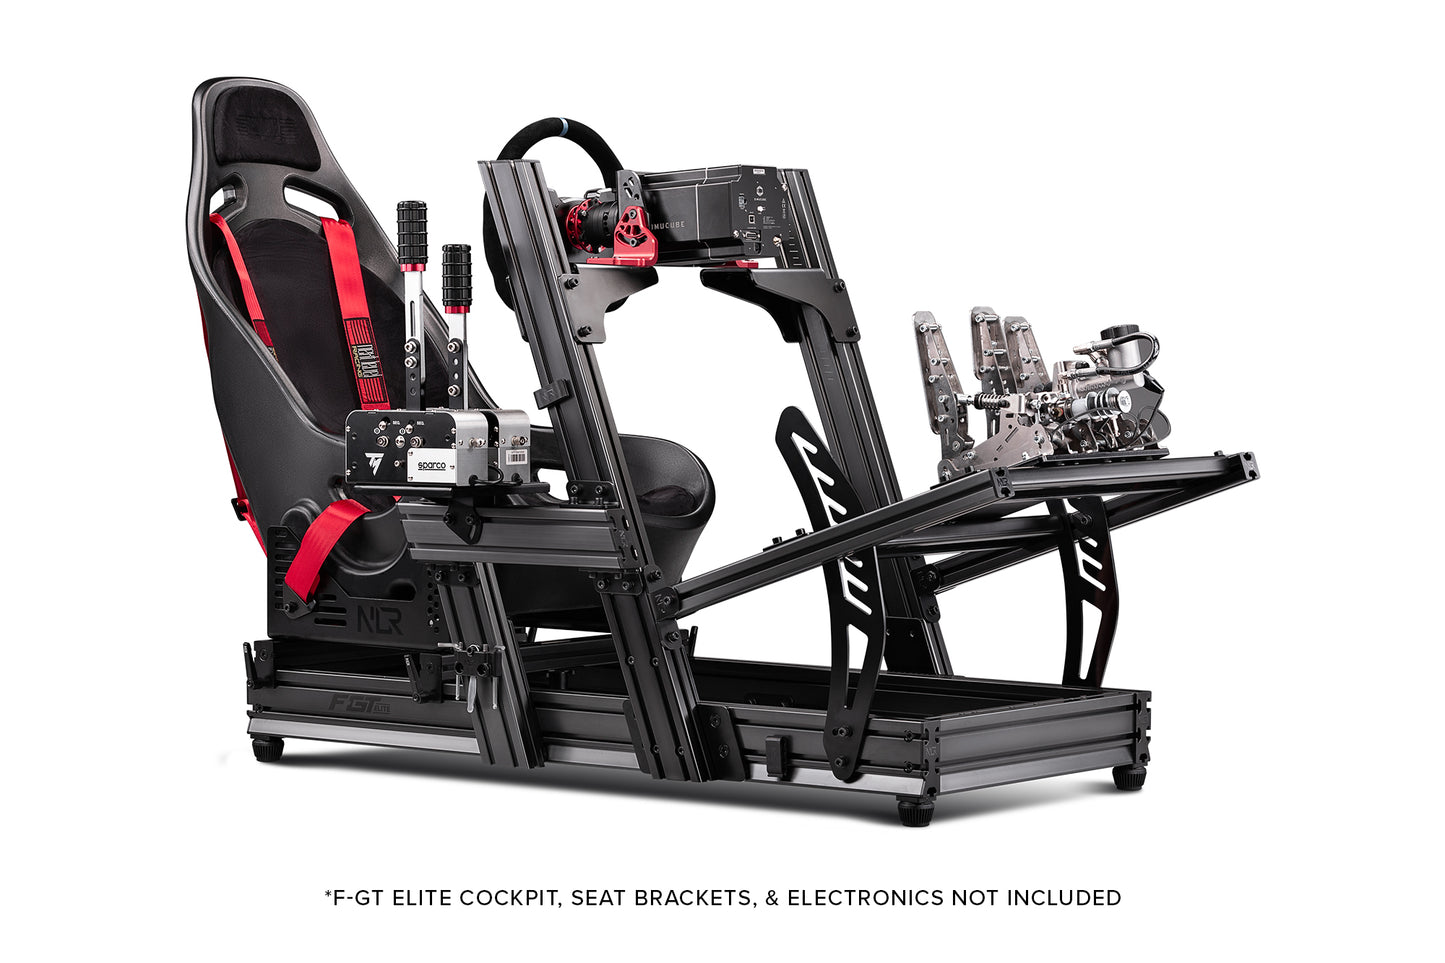 Next Level Racing Elite ES-1 Formula Fixed Back Seat